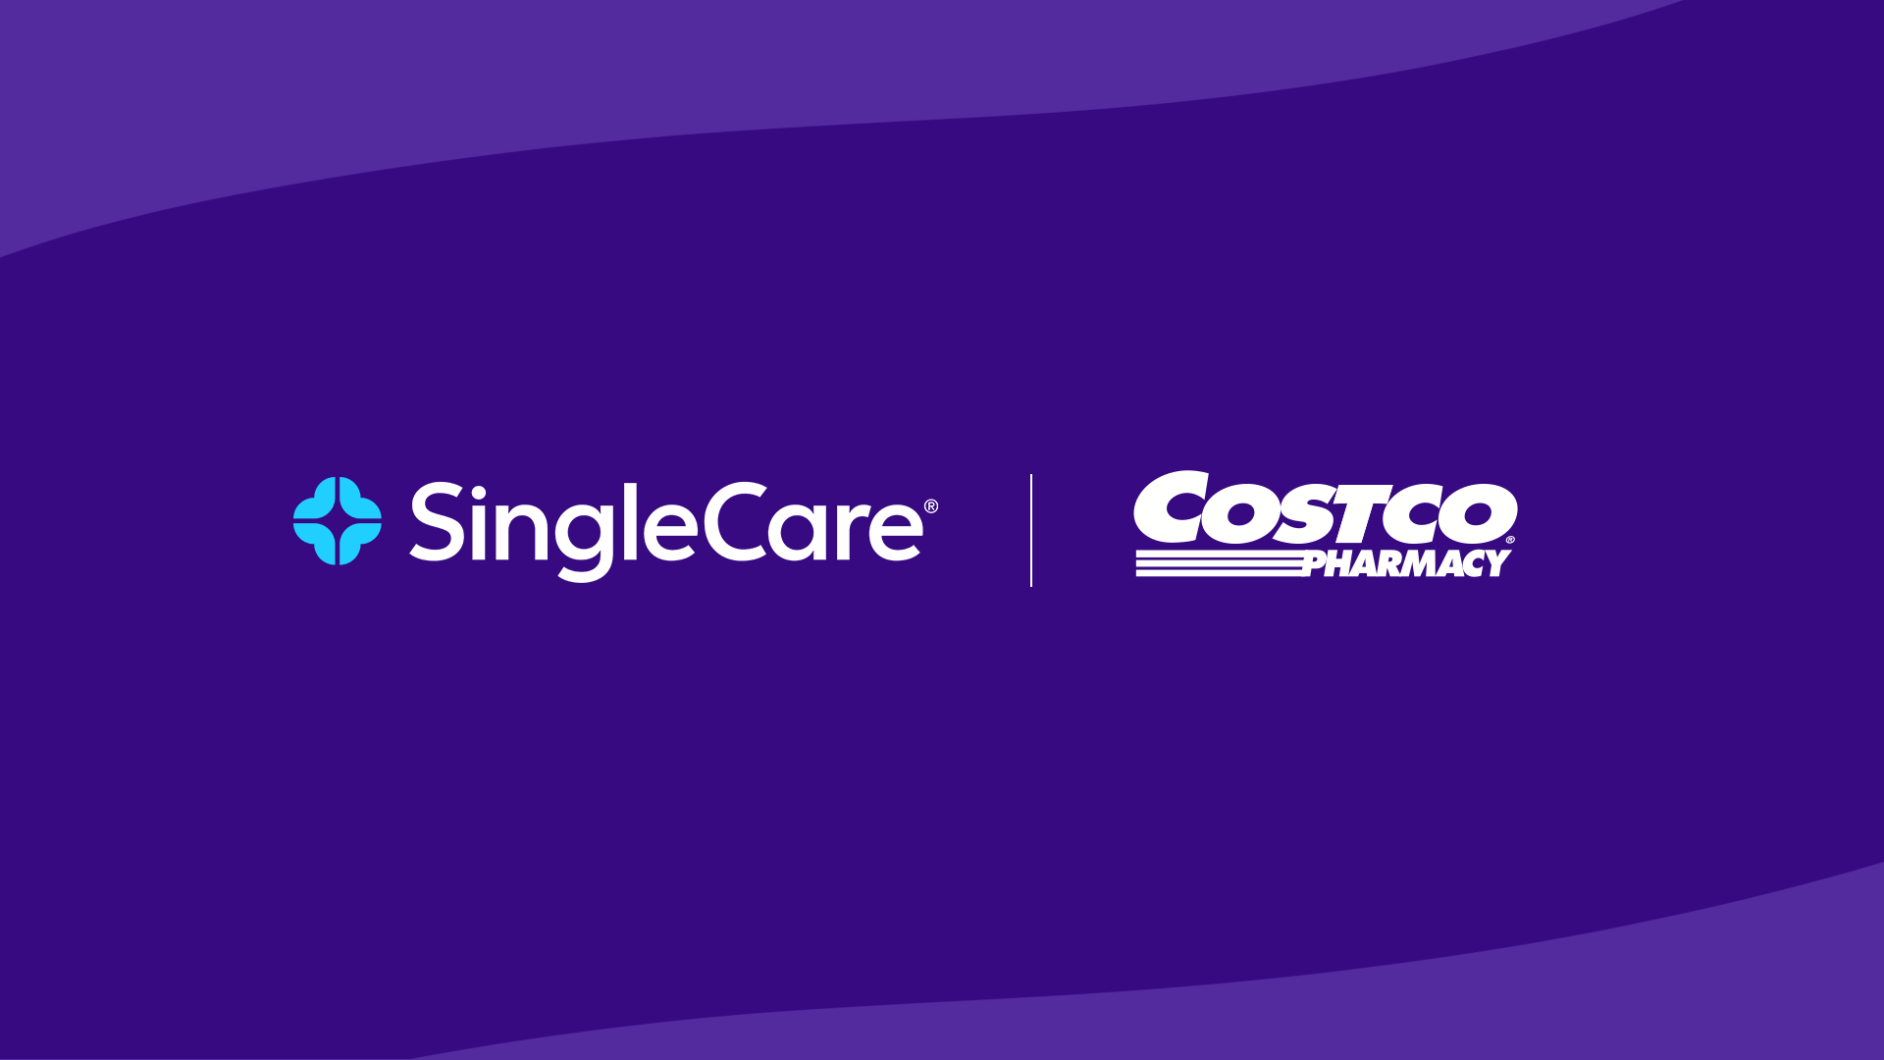 Costco pharmacy and SingleCare logos